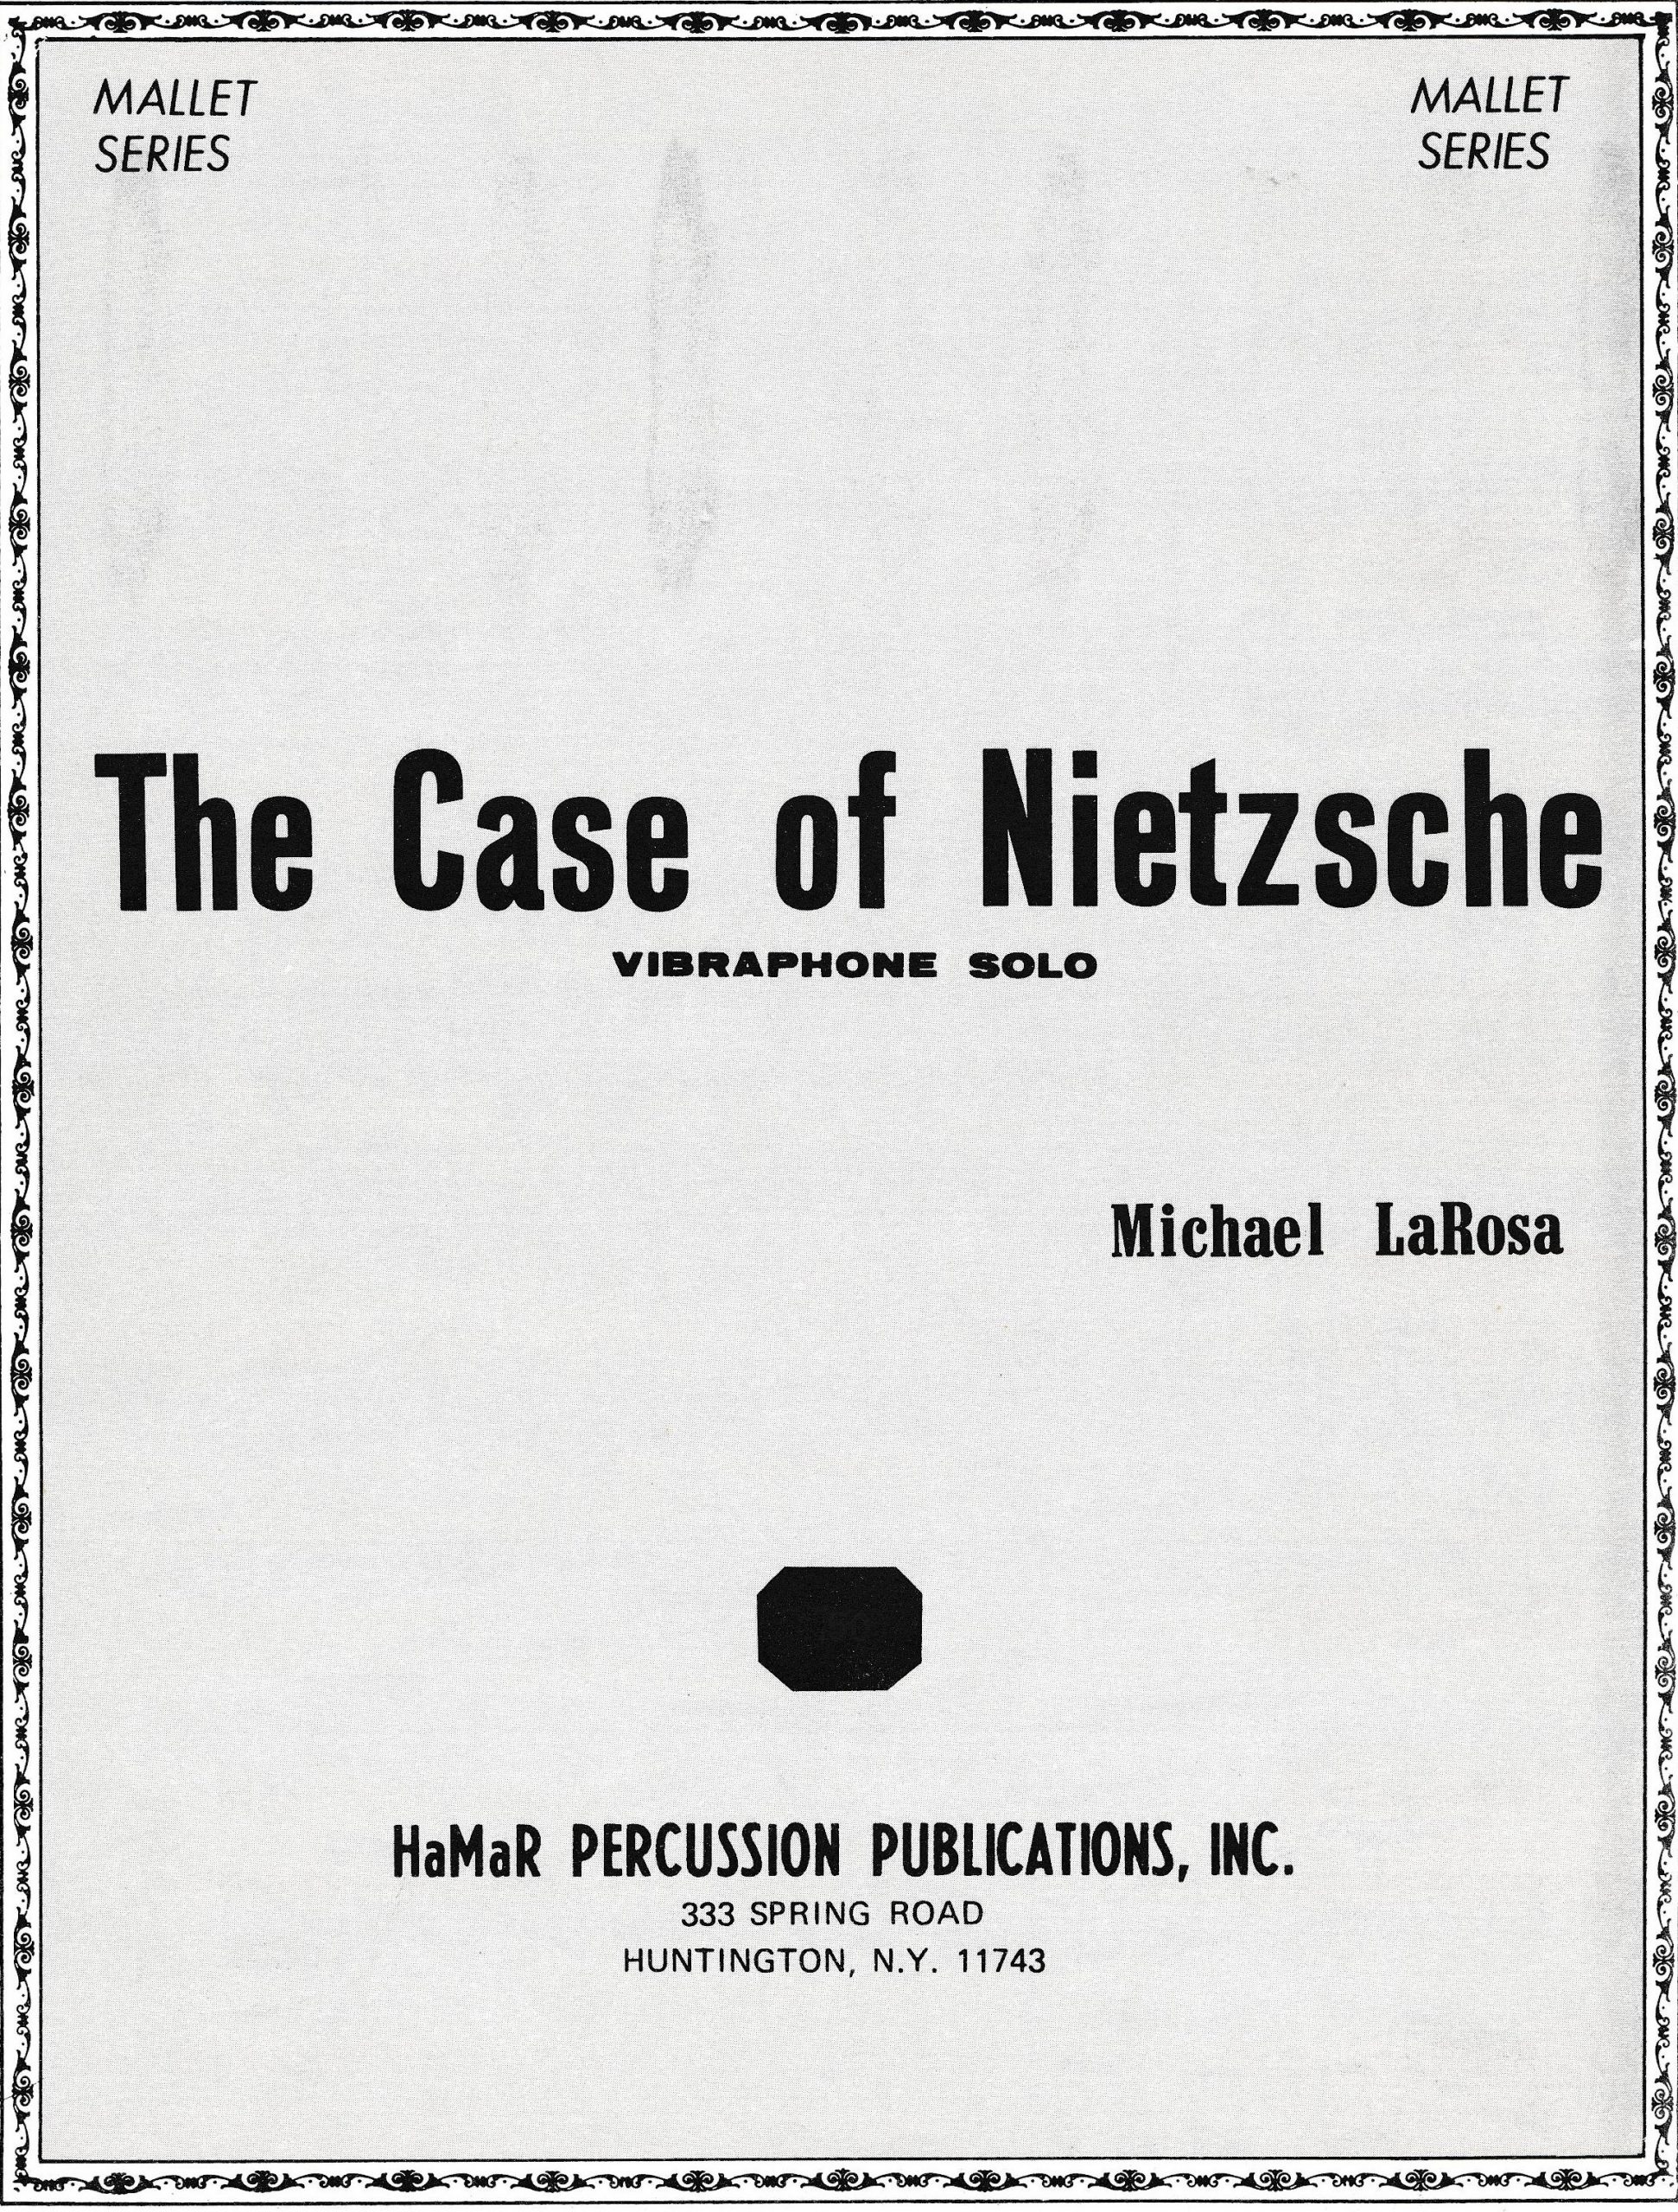 The Case of Nietzsche by Michael LaRosa